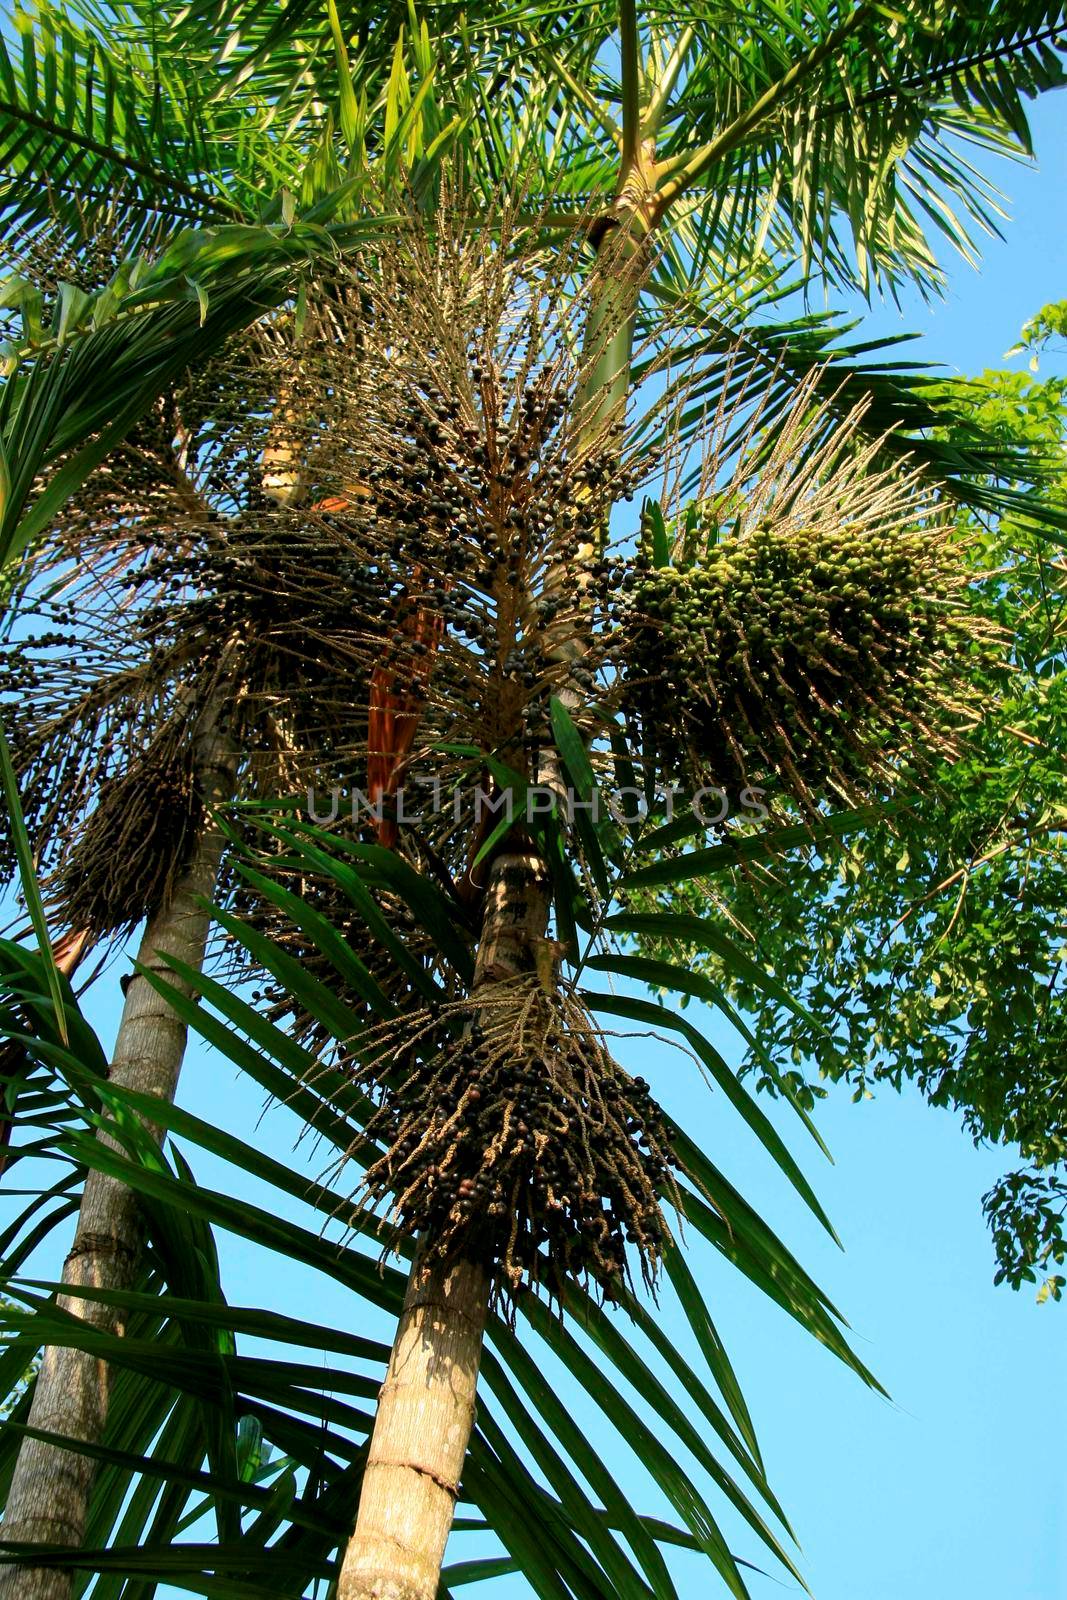 mucuri, bahia / brazil - october 29, 2008: Acai palm plantation in the municipality of Mucuri, in southern Bahia.





